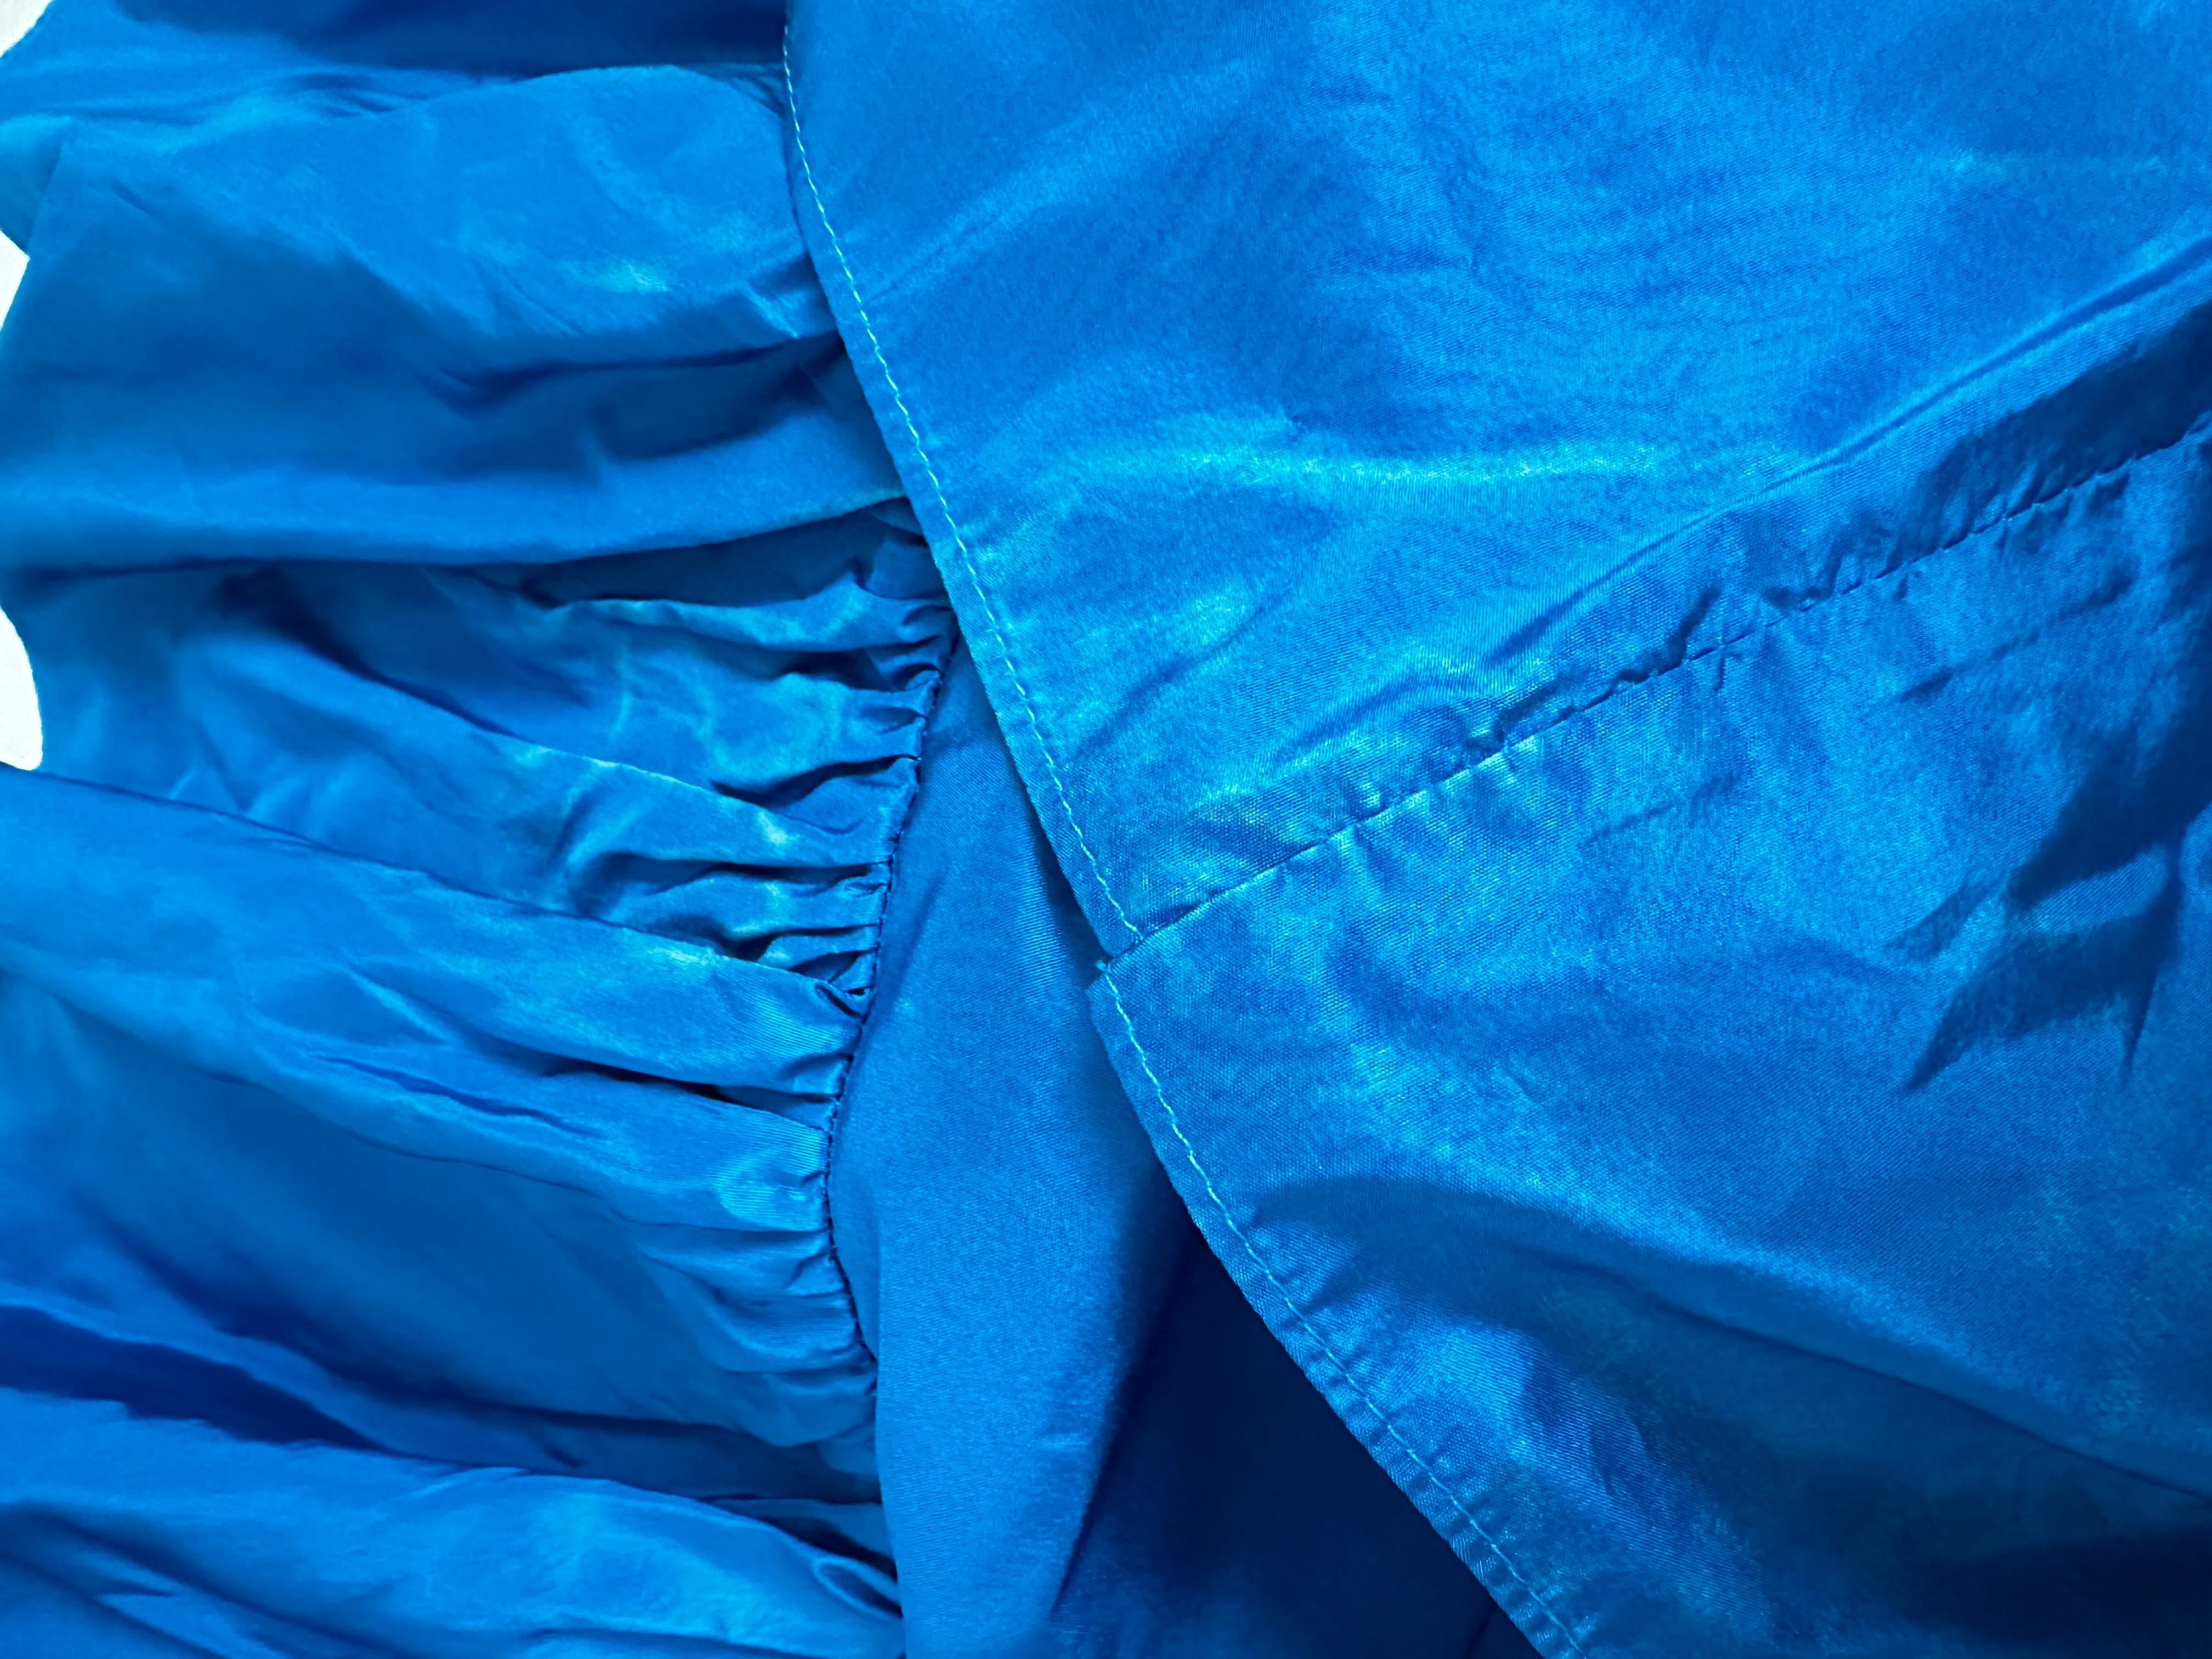 Roberto Cavalli 2005 blue ruffle maxi gown dress For Sale 3